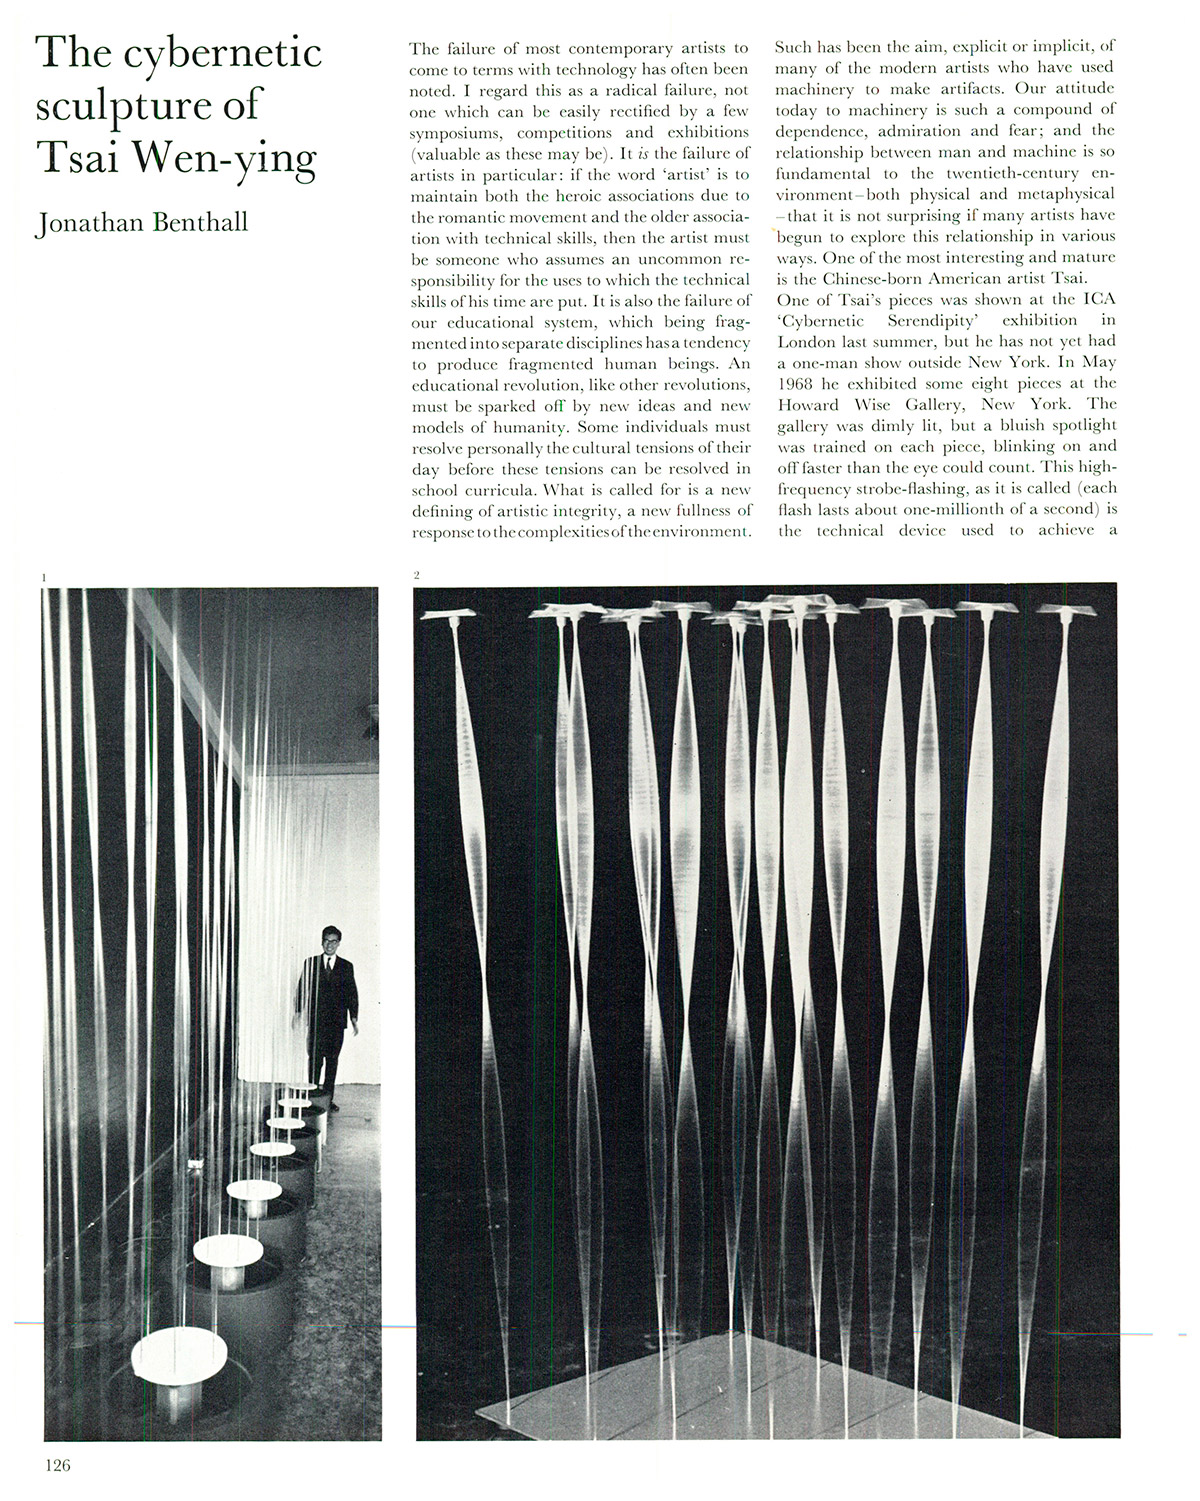 The cybernetic sculpture of Tsai Wen-ying. Studio International, Vol 177, No 909, March 1969. p. 126.